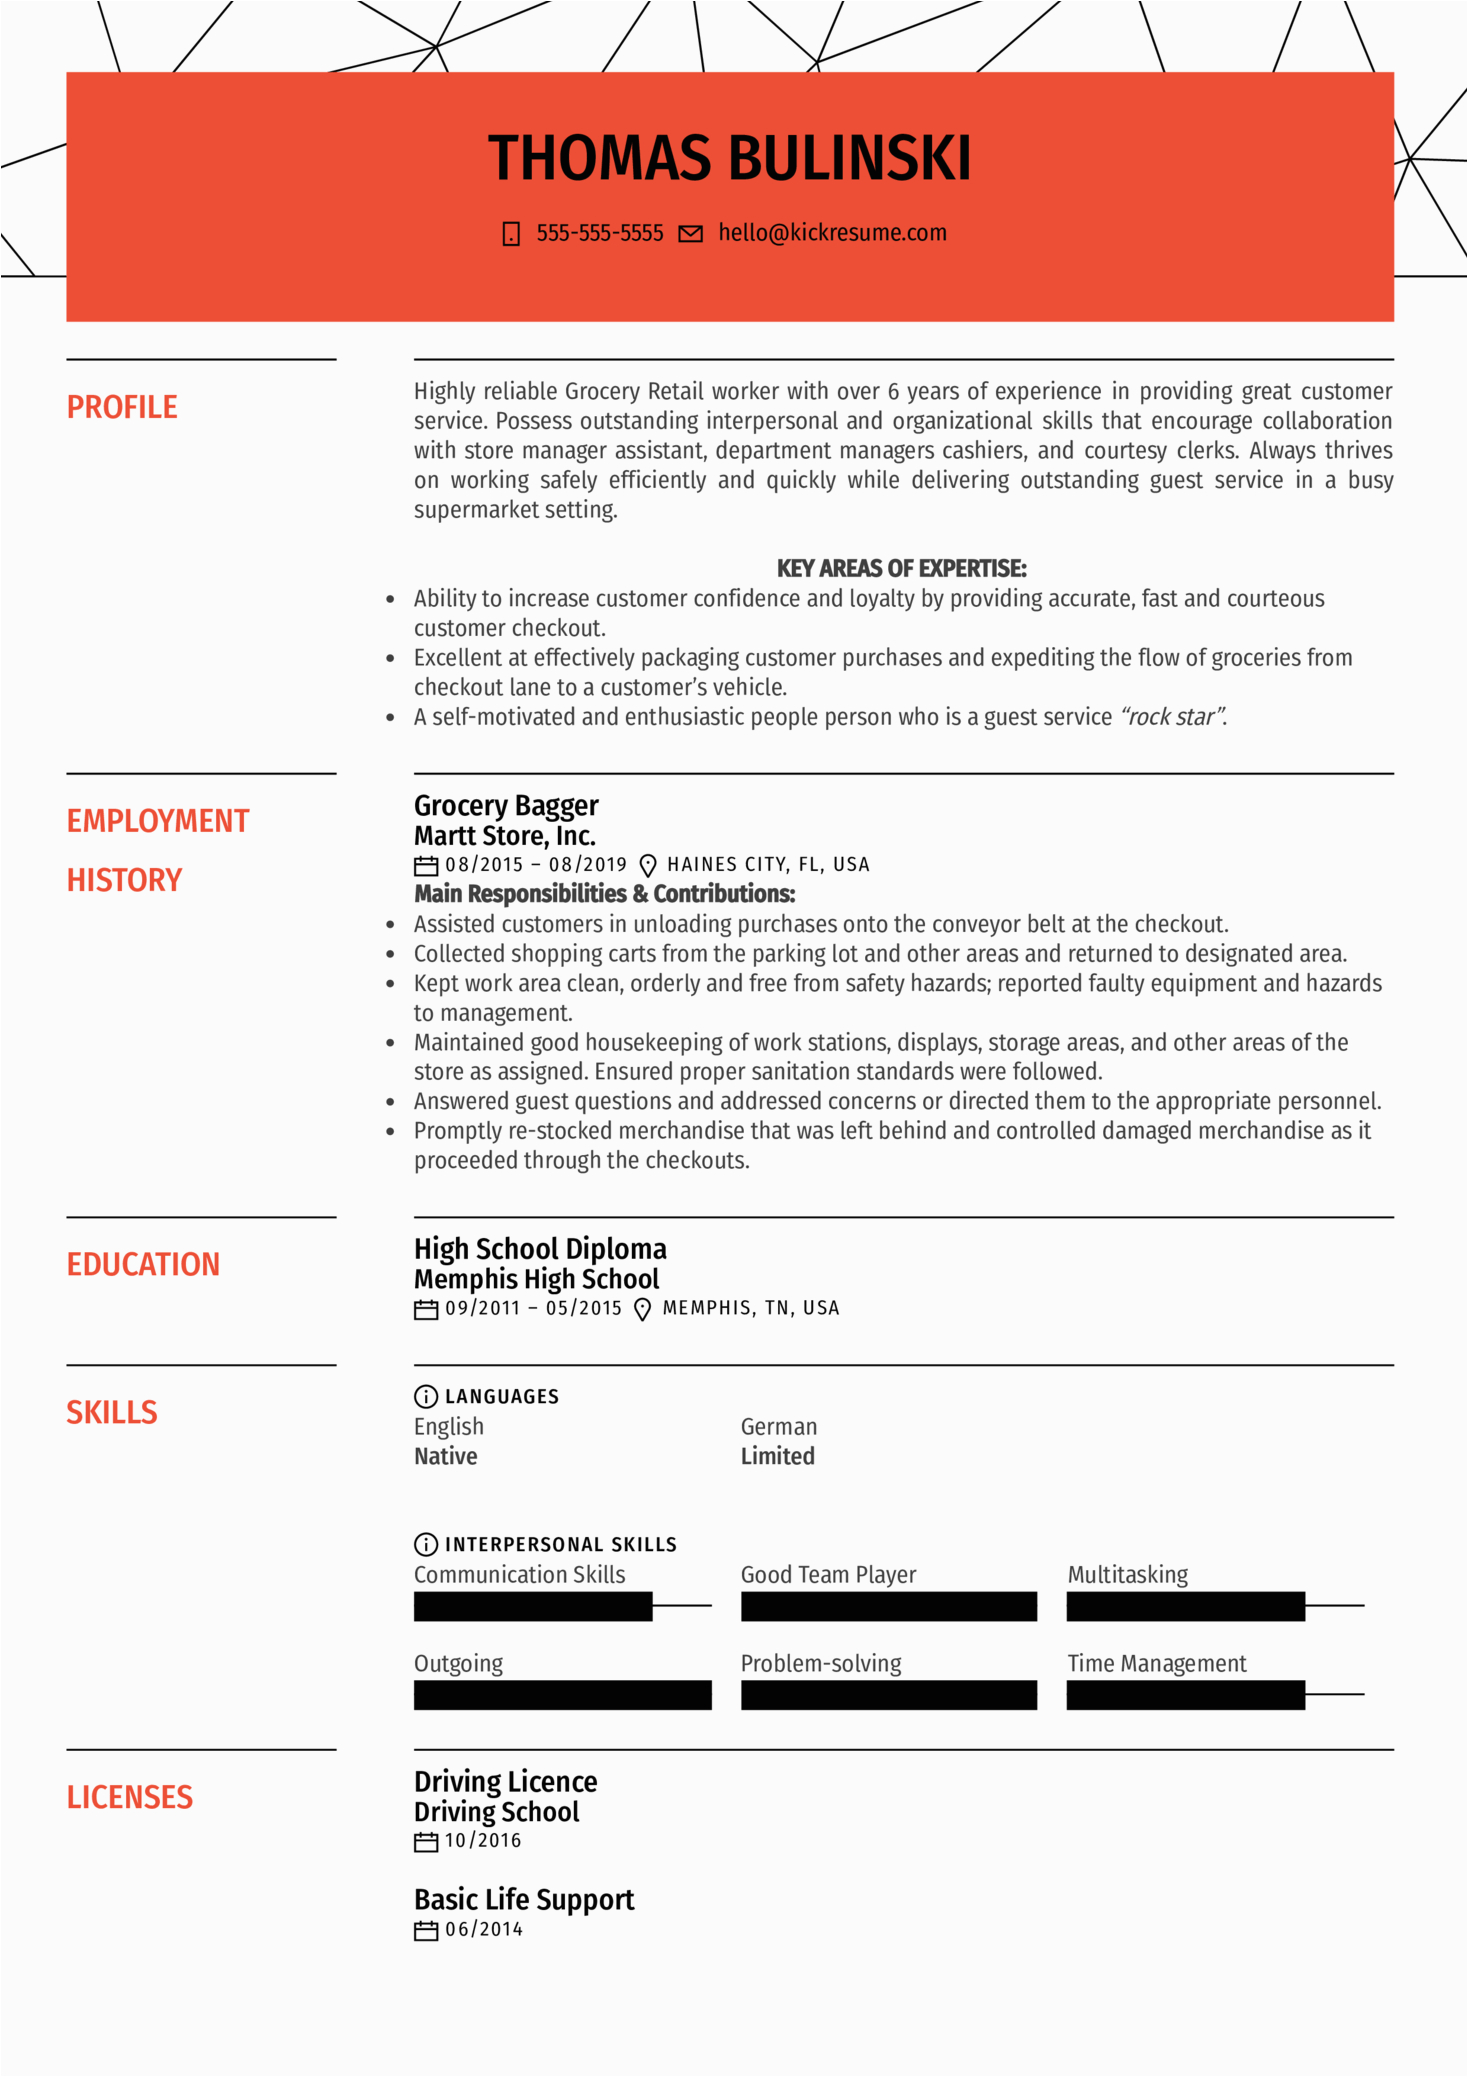 Sample Resume for Grocery Store Bagger Grocery Bagger Resume Sample